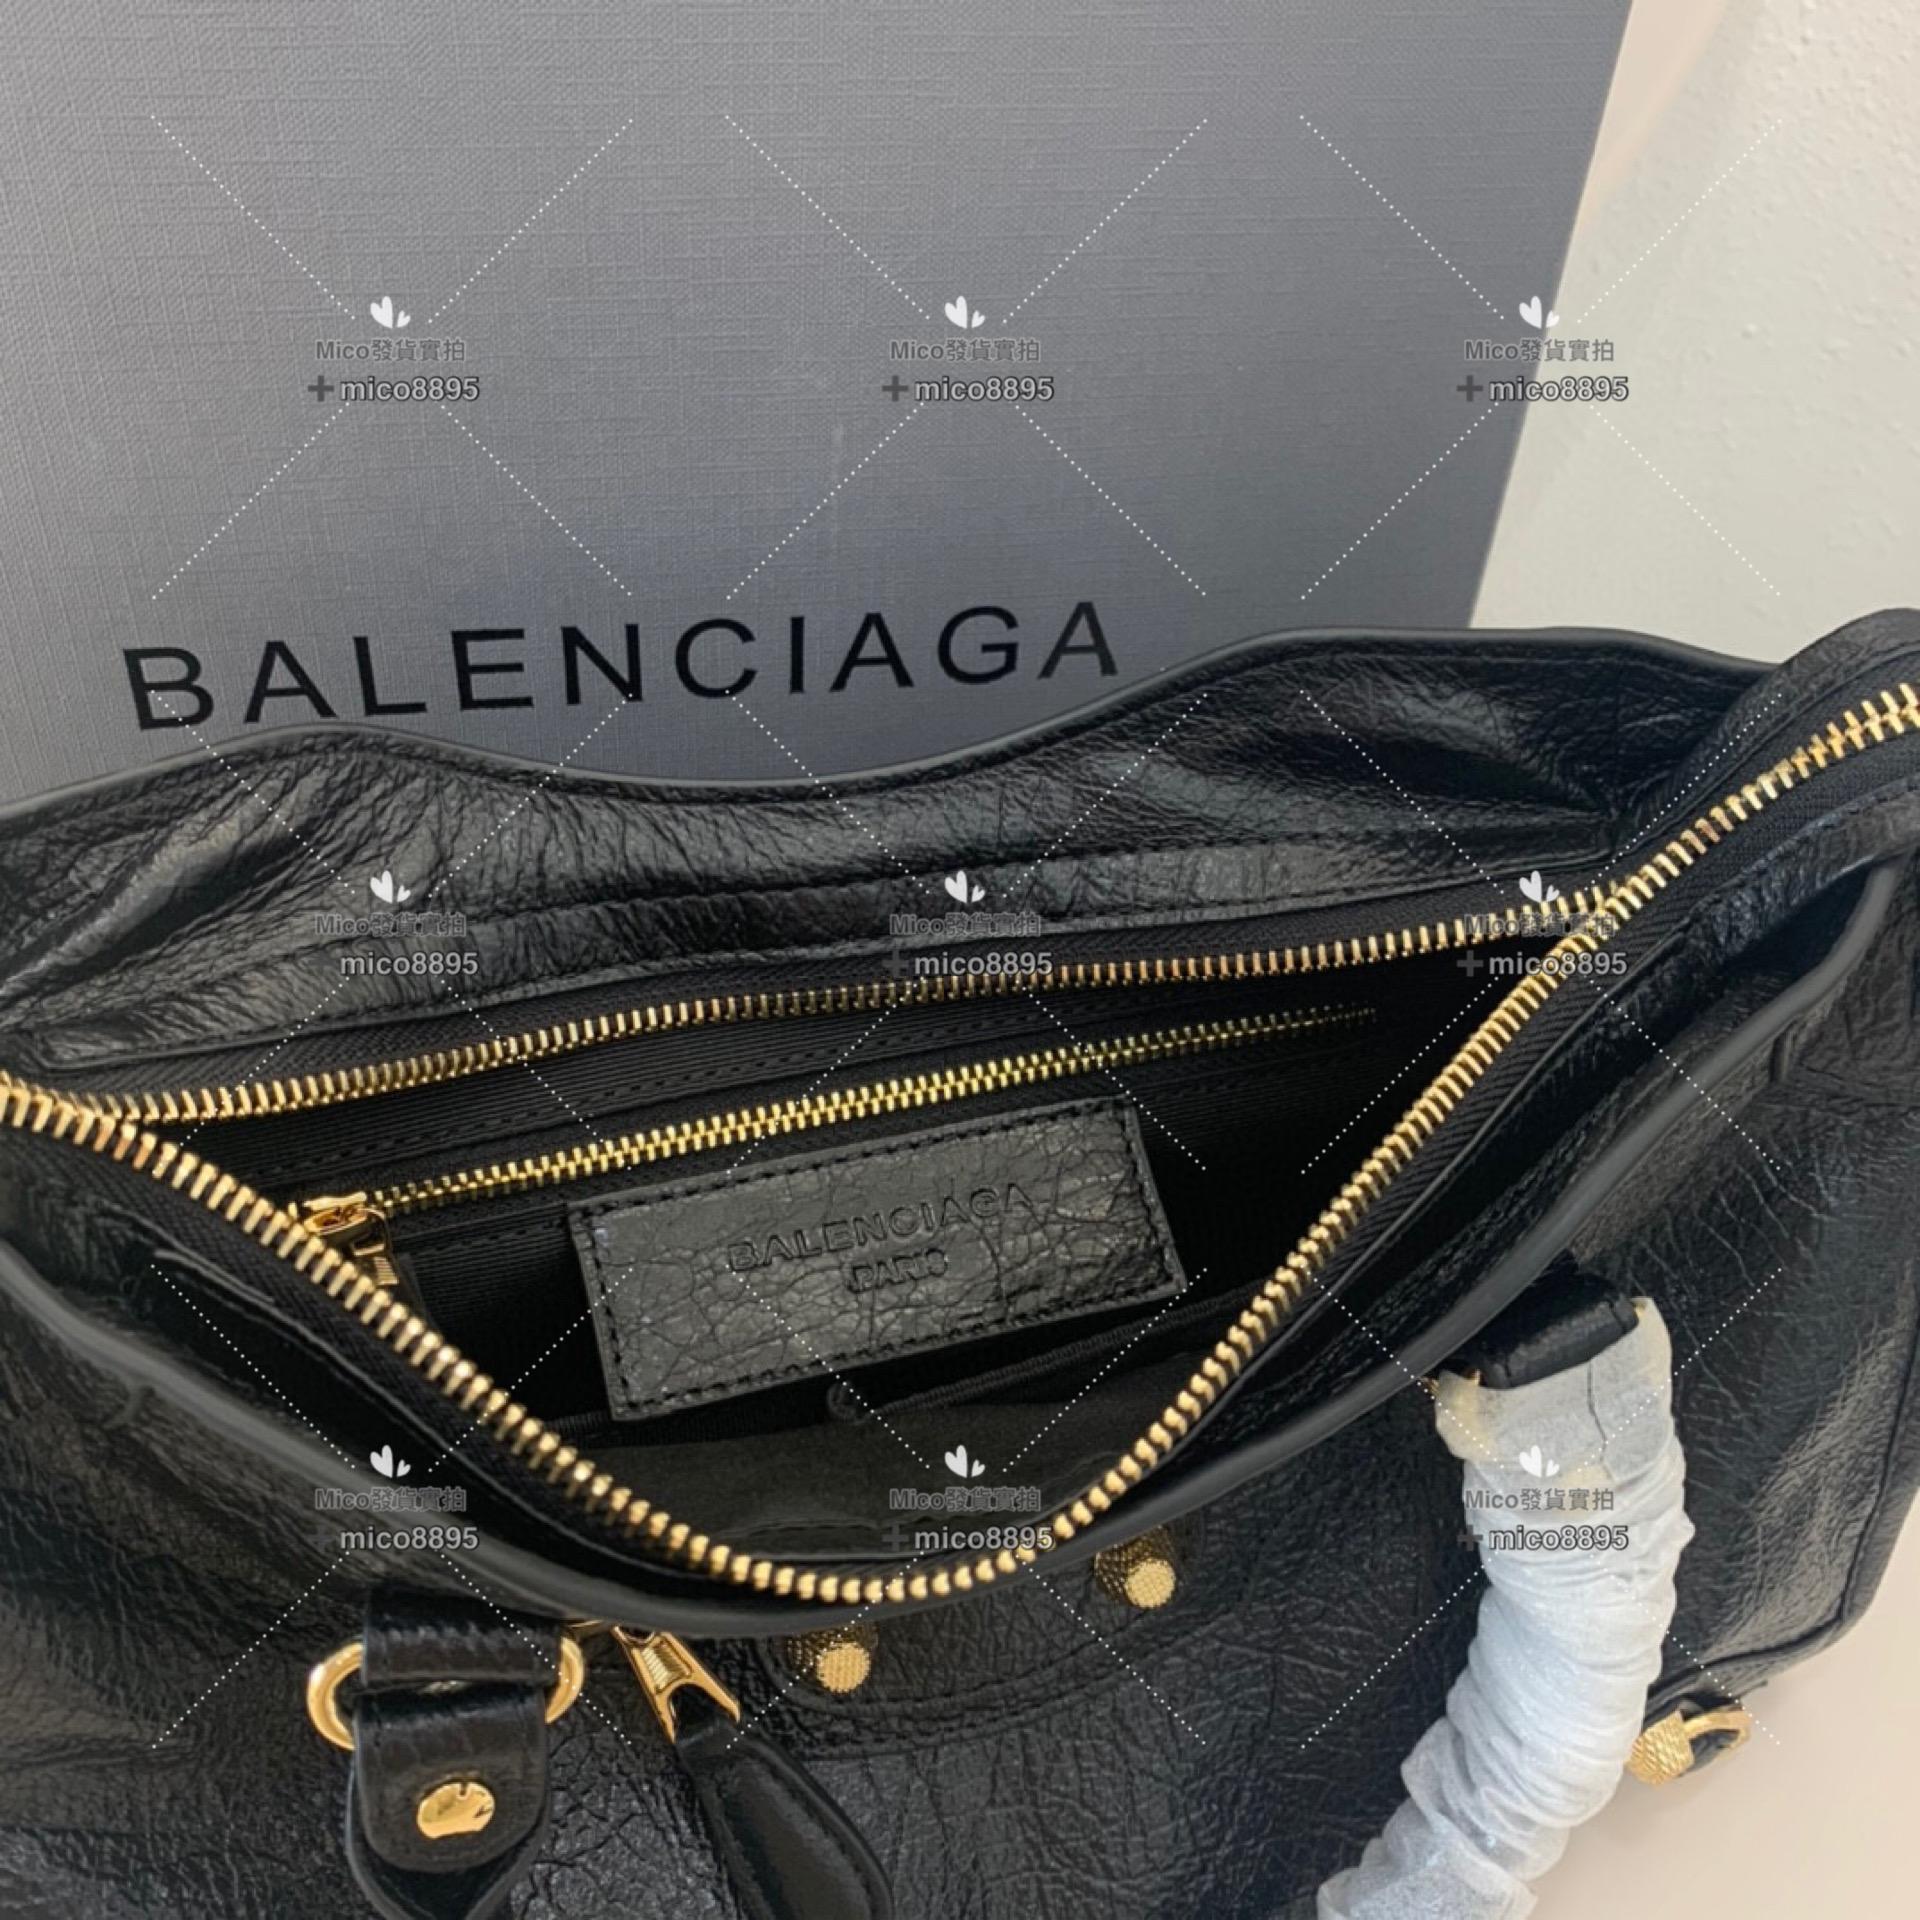 Balenciaga 爆裂皮革 綿羊皮 玫瑰金釦 機車包 通勤🉑️ 38cm